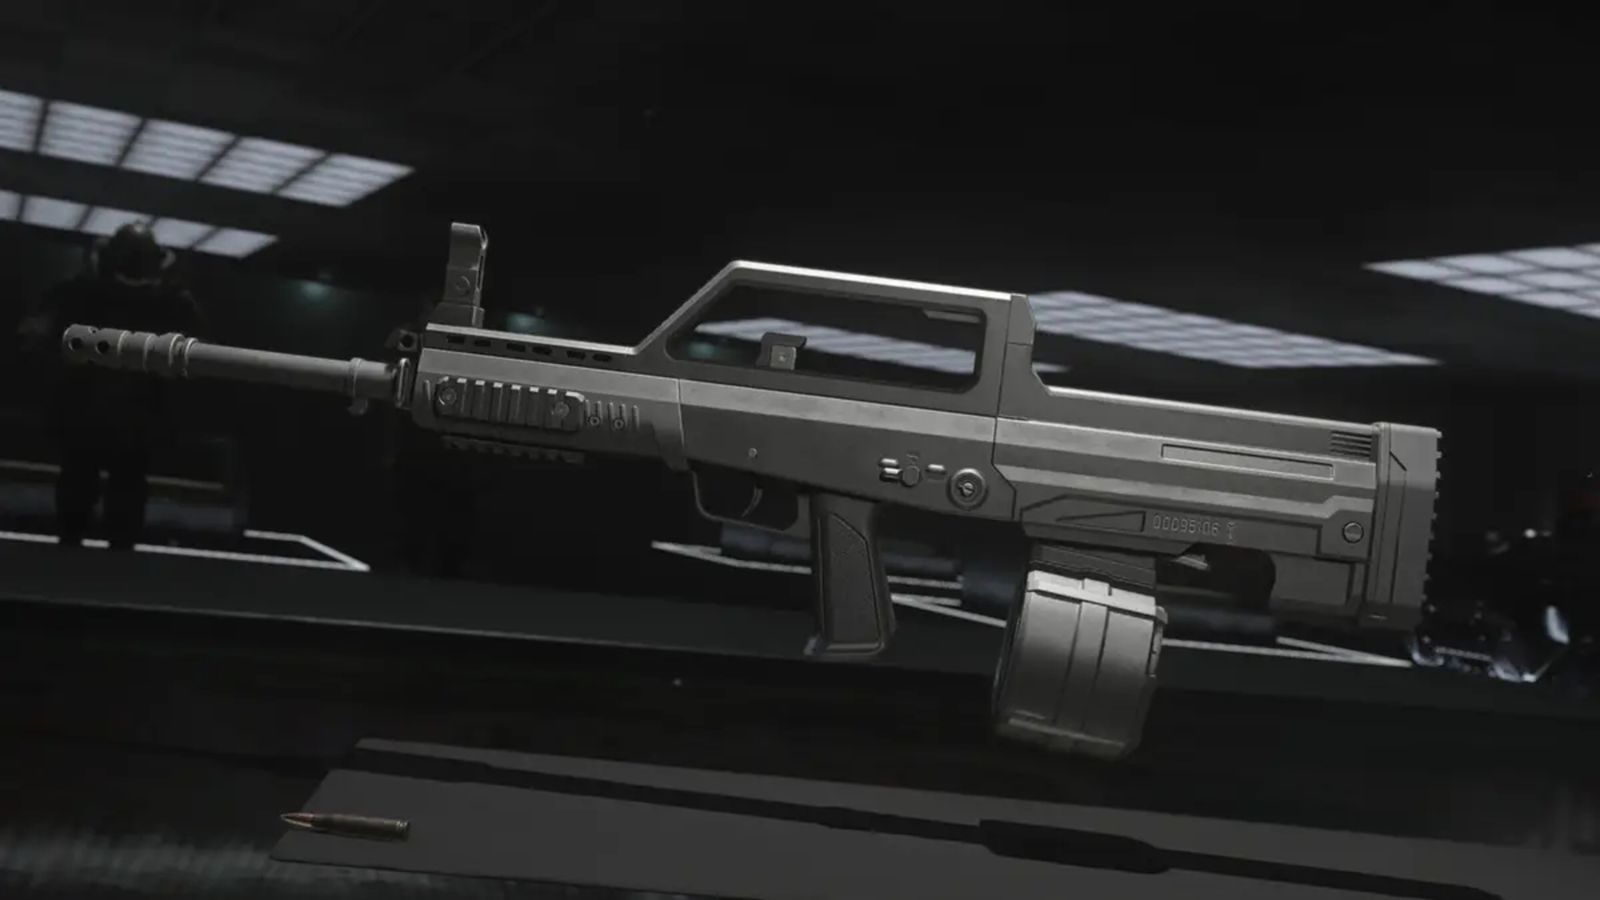 Warzone DG-58 gun